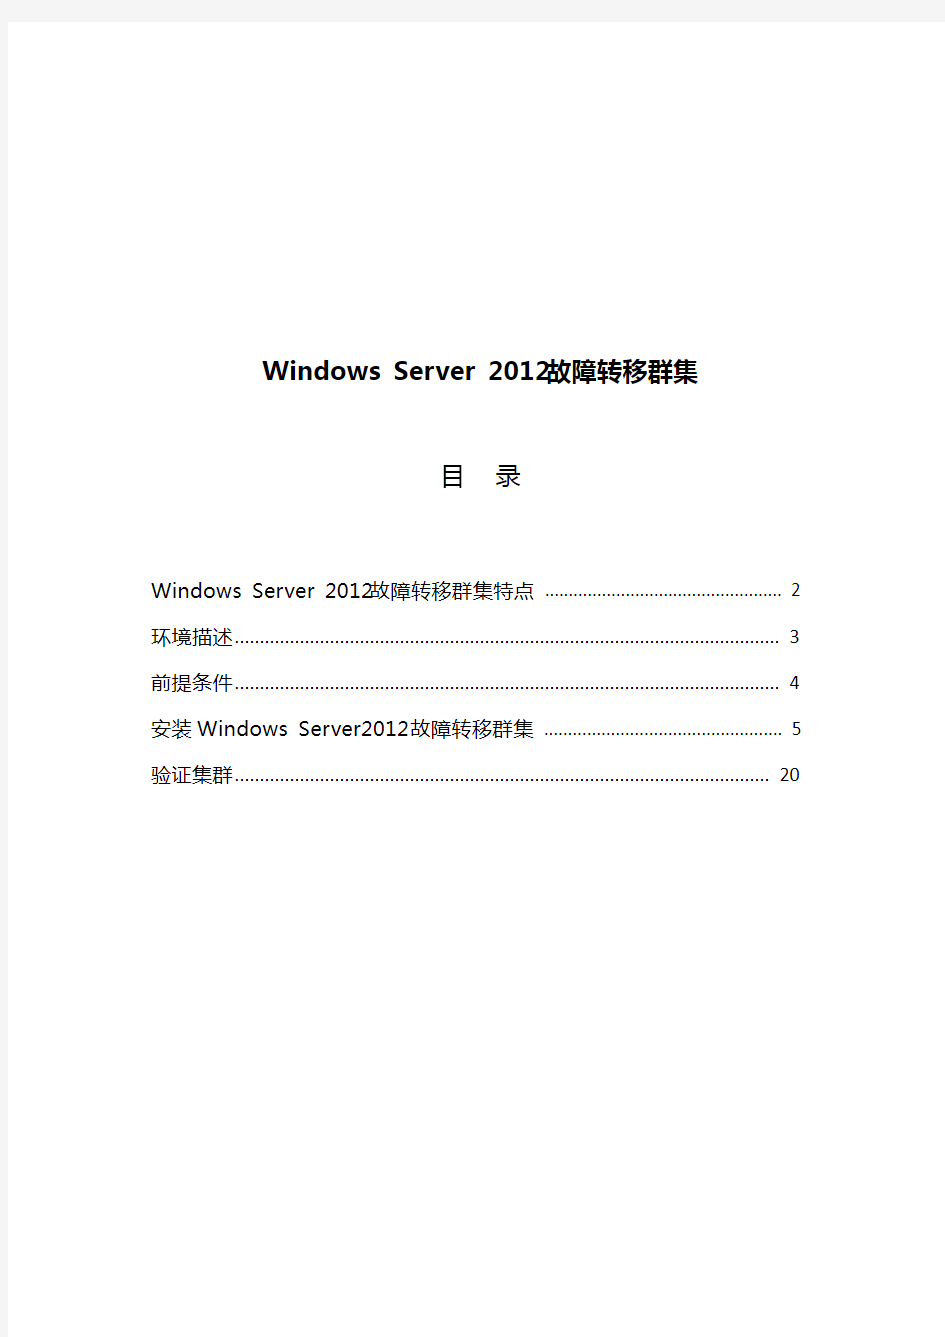 Windows_Server_2012_故障转移群集